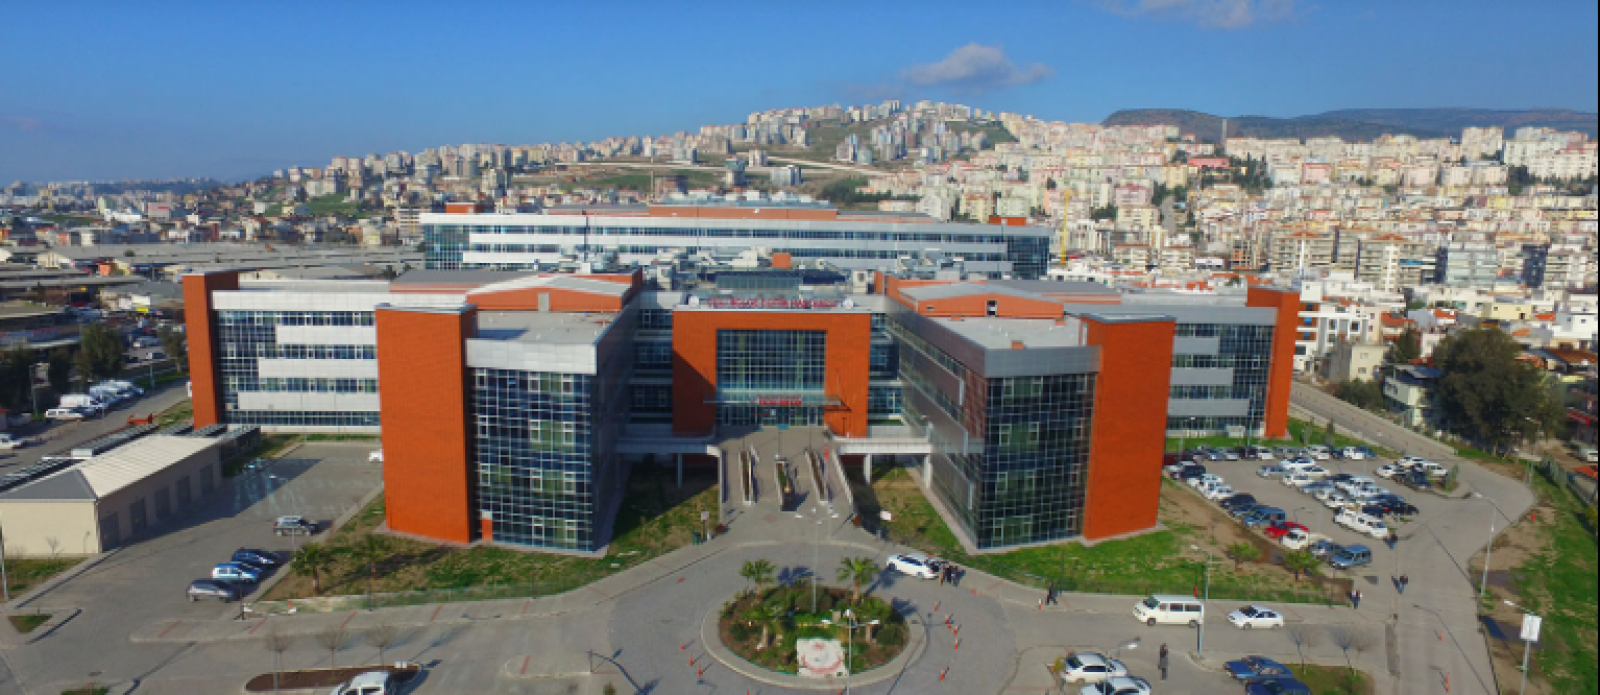 İzmir Karşıyaka 400 Bed Public Hospital